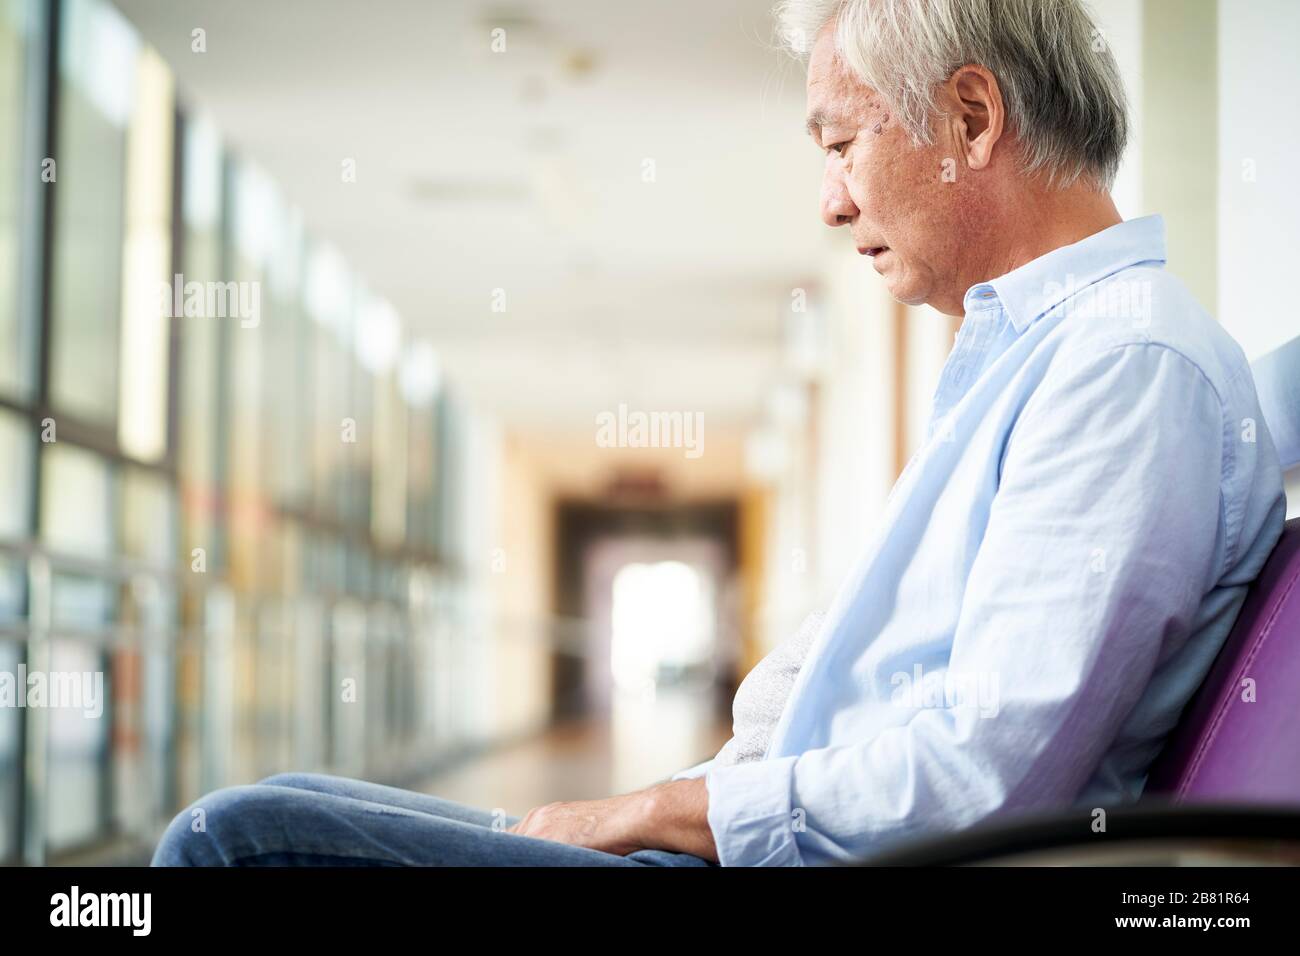 sad and devastated asian senior man sitting alone in empty hospital hallway, head down Stock Photo